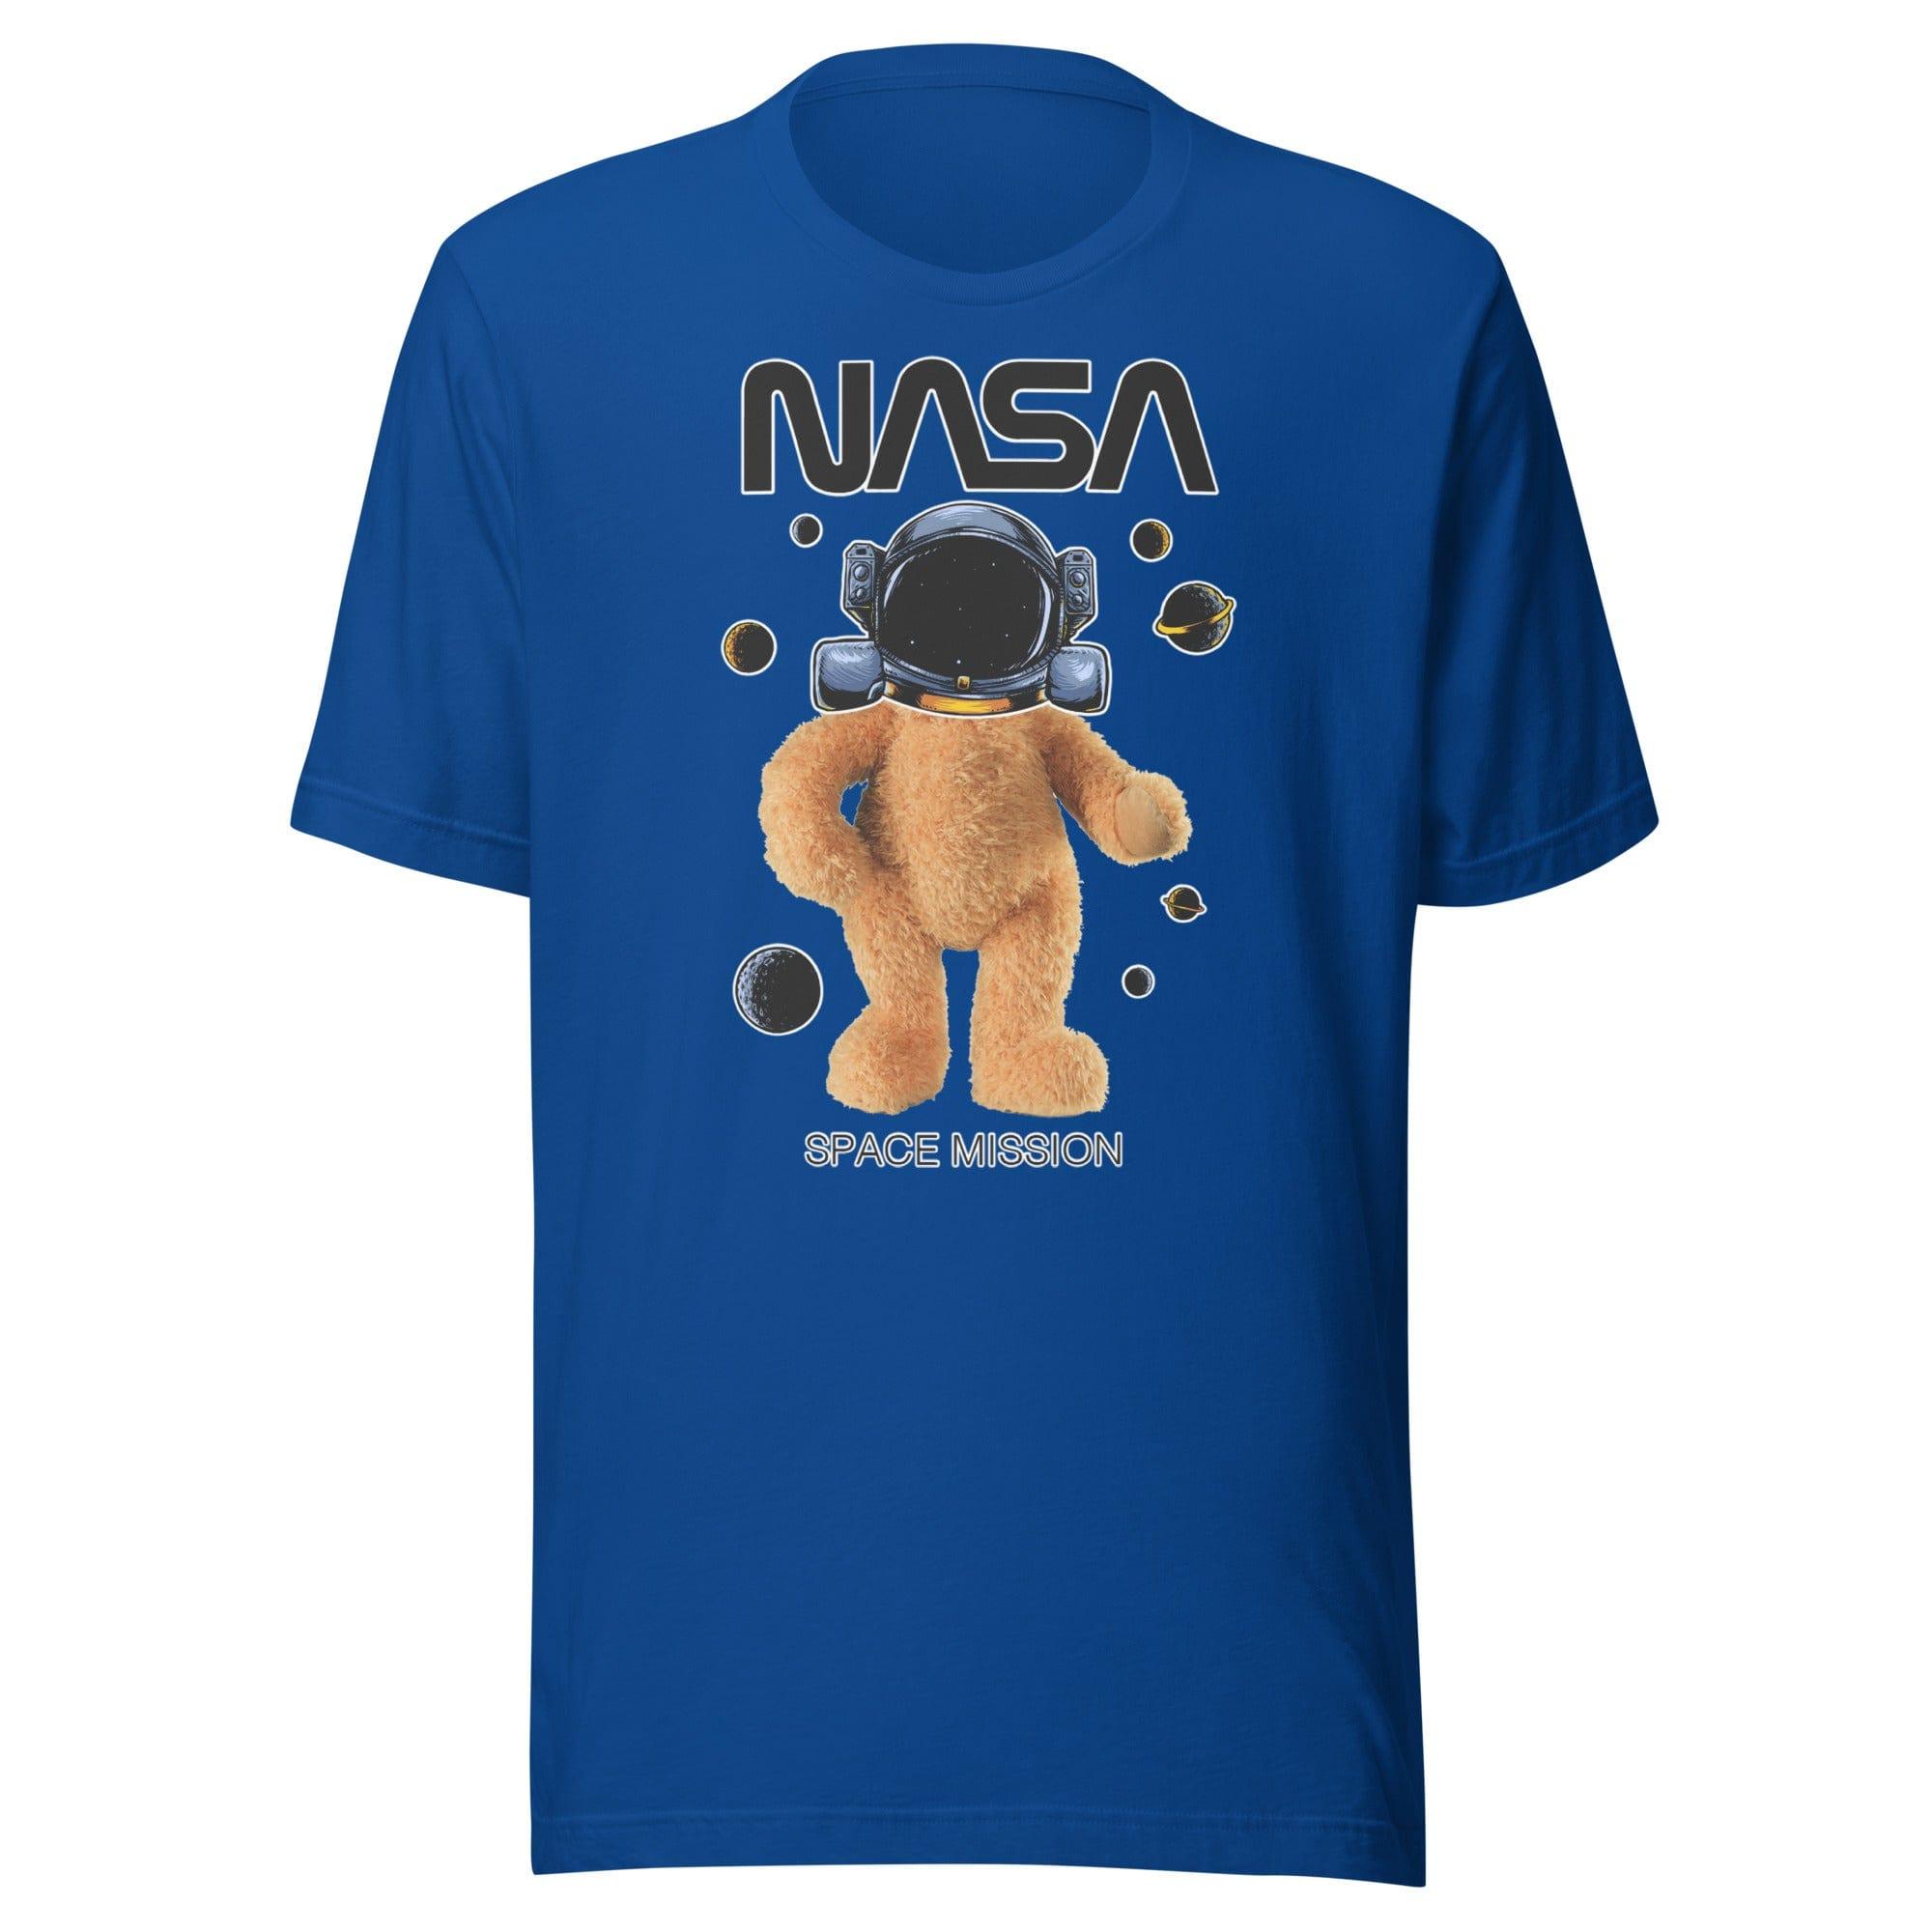 NASA T-Shirt Urban Teddy Series Space Mission Astronaut Short Sleeve Top - TopKoalaTee